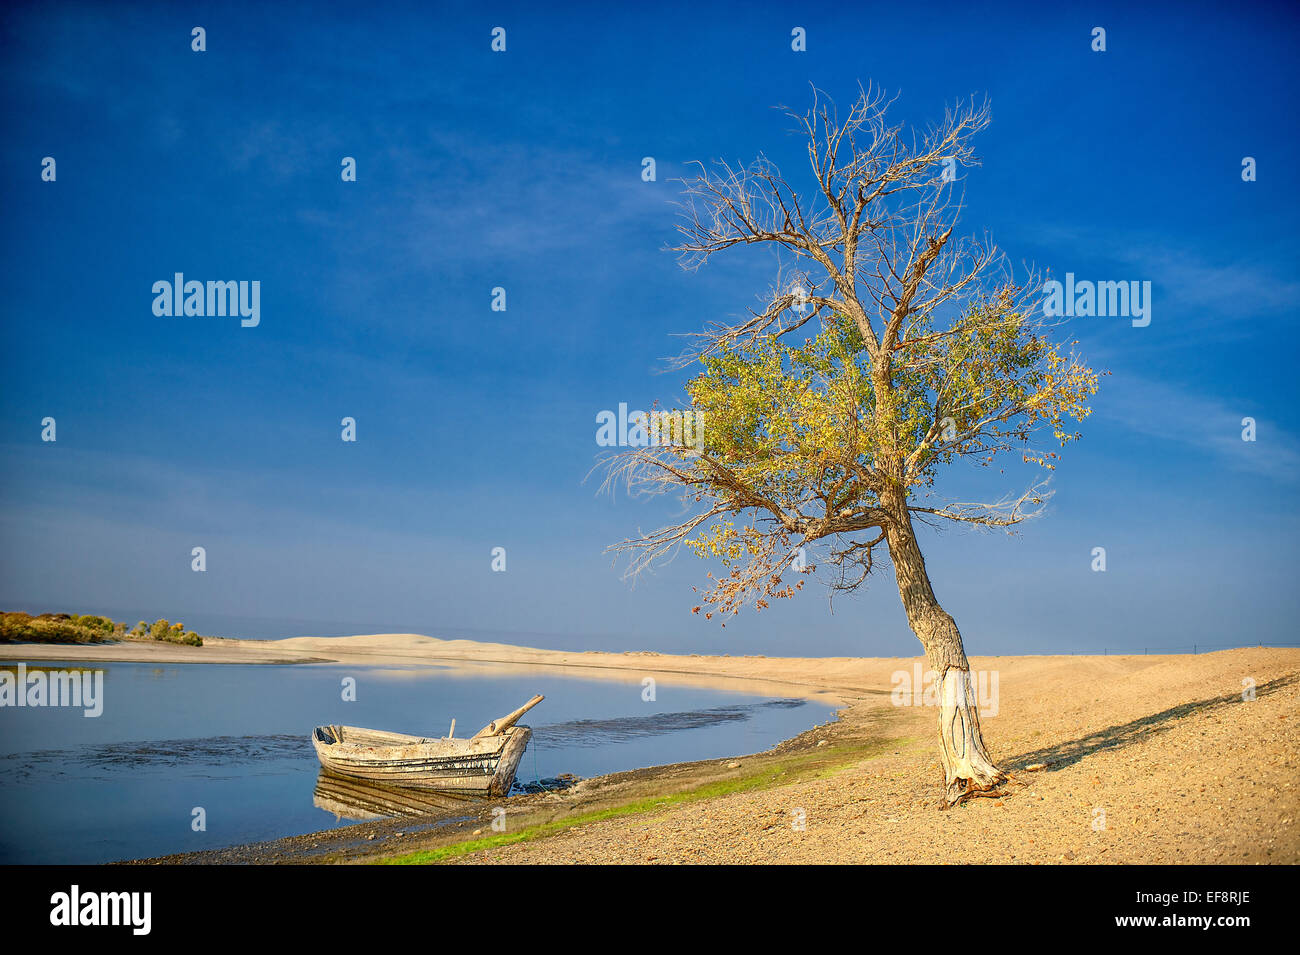 China, Xinjiang, Altay, Irtysh River, Rowboat and lone tree on shore of still lake Stock Photo